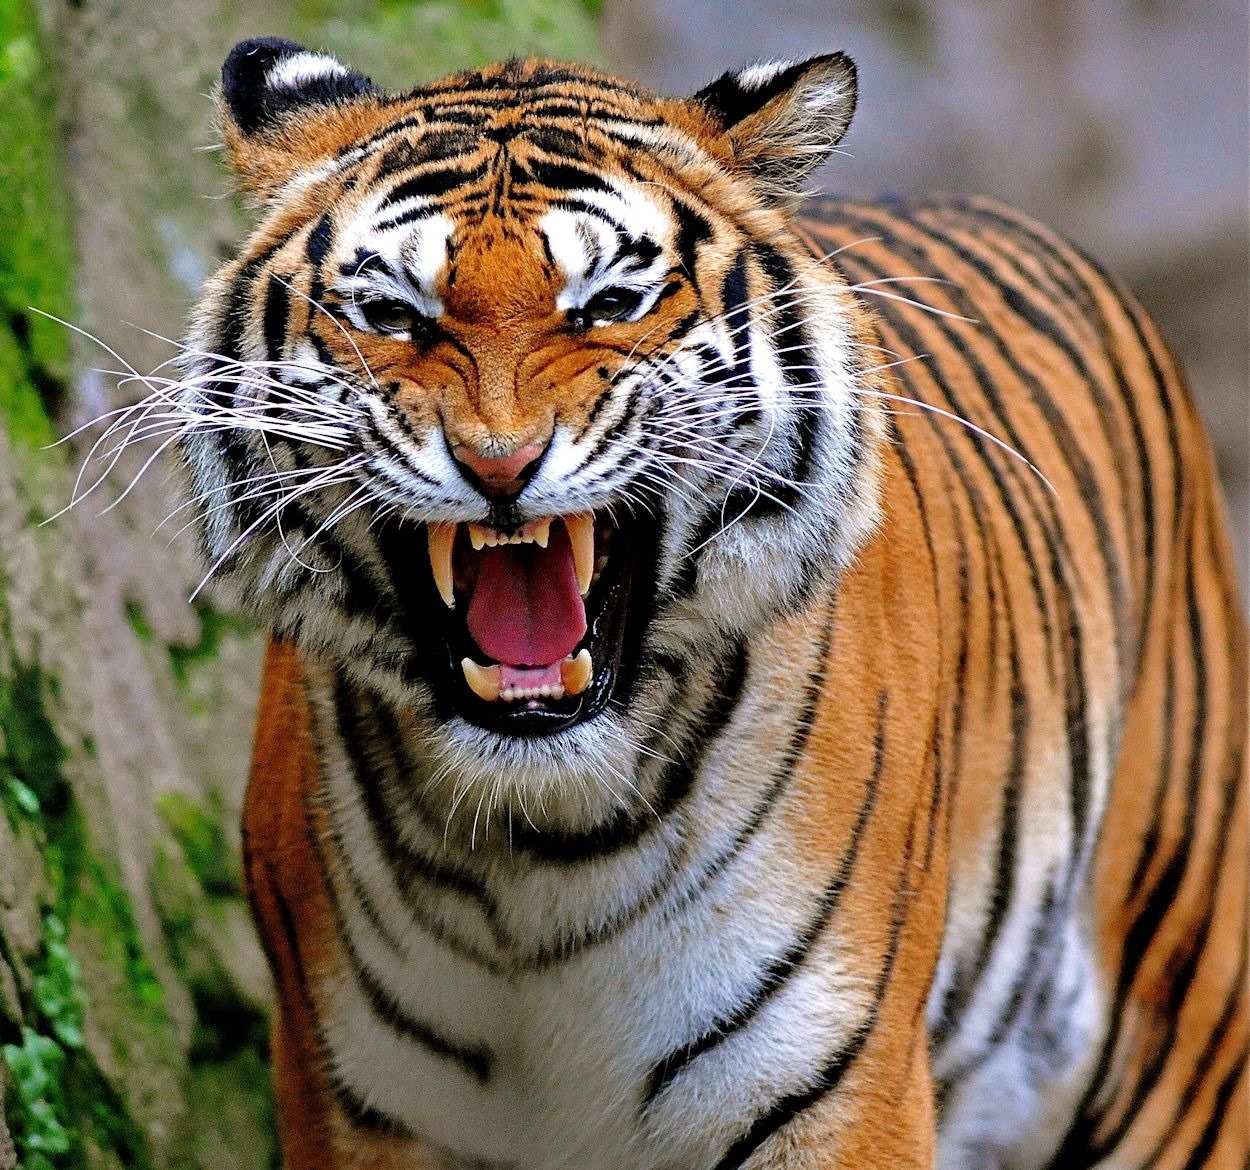 Bengal Tiger Growling